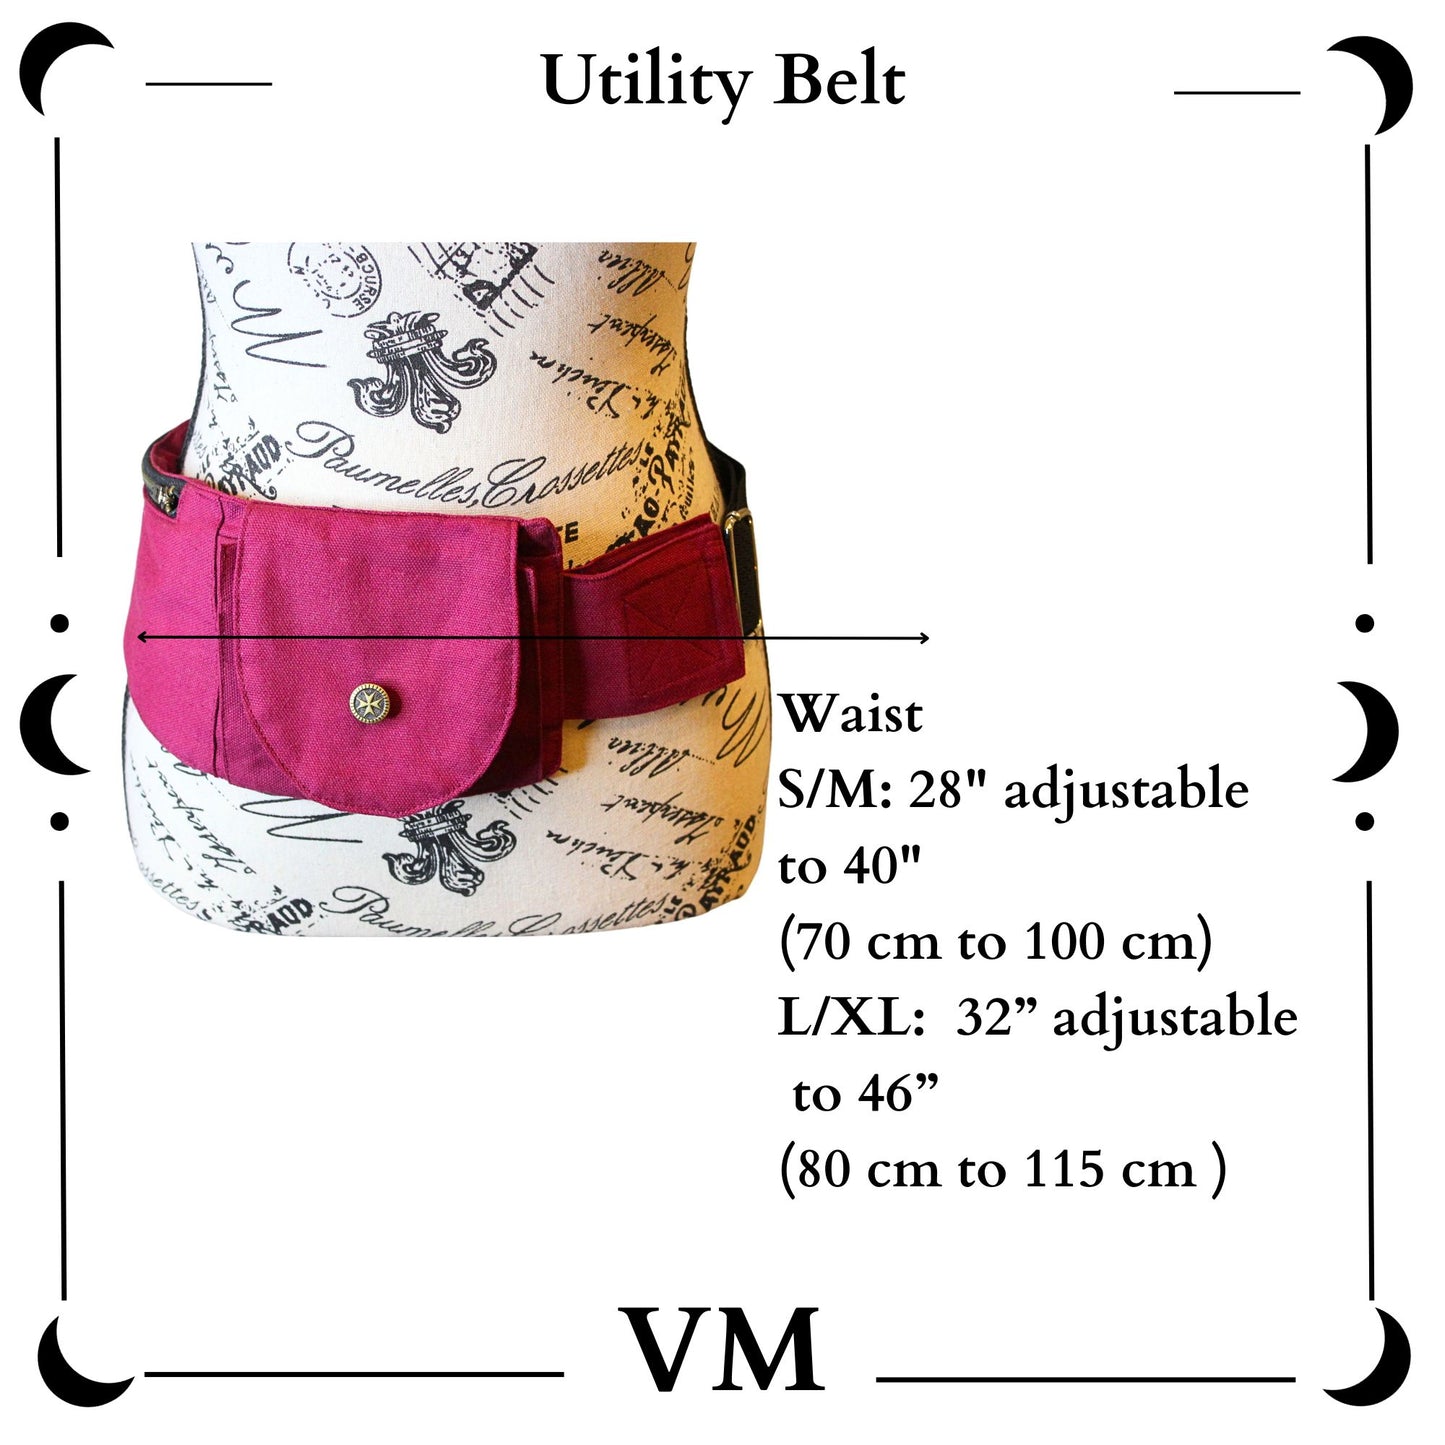 The VM Utility Pocket Belt